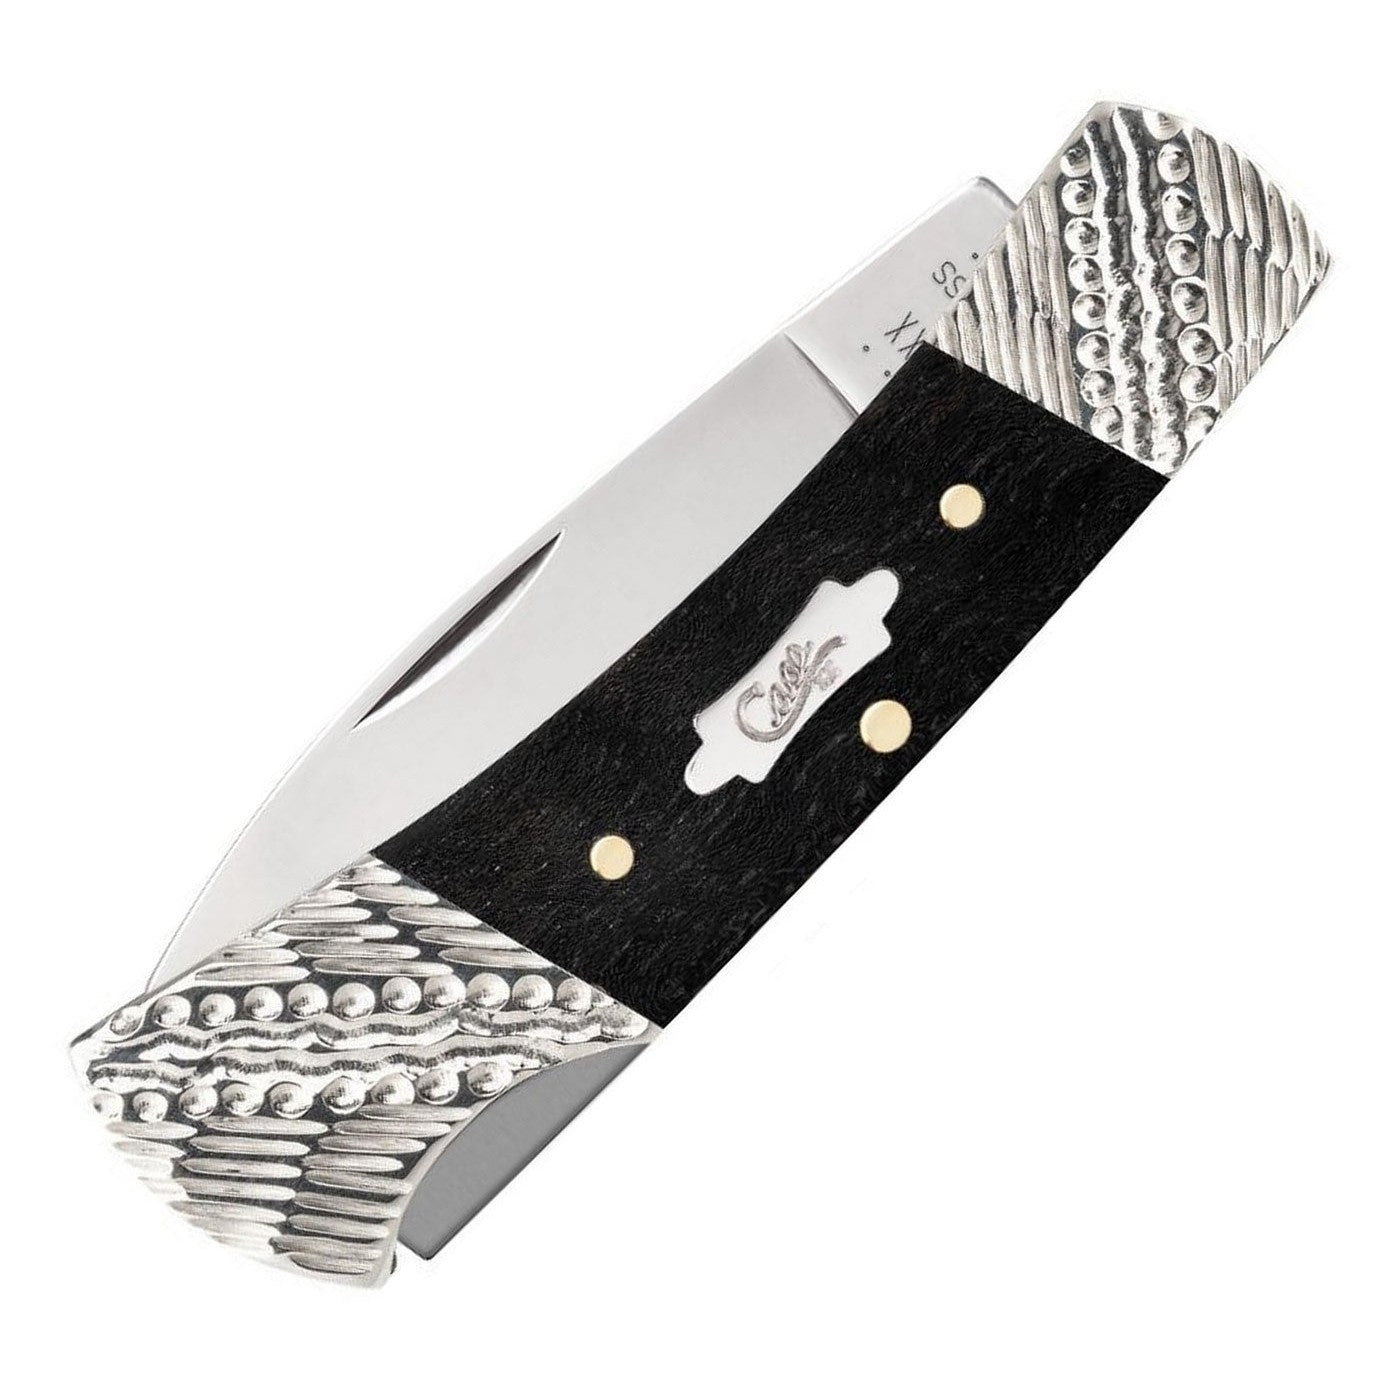 Worked Bolster Ebony Wood Smooth Lockback-Case Cutlery-OnlyKnives